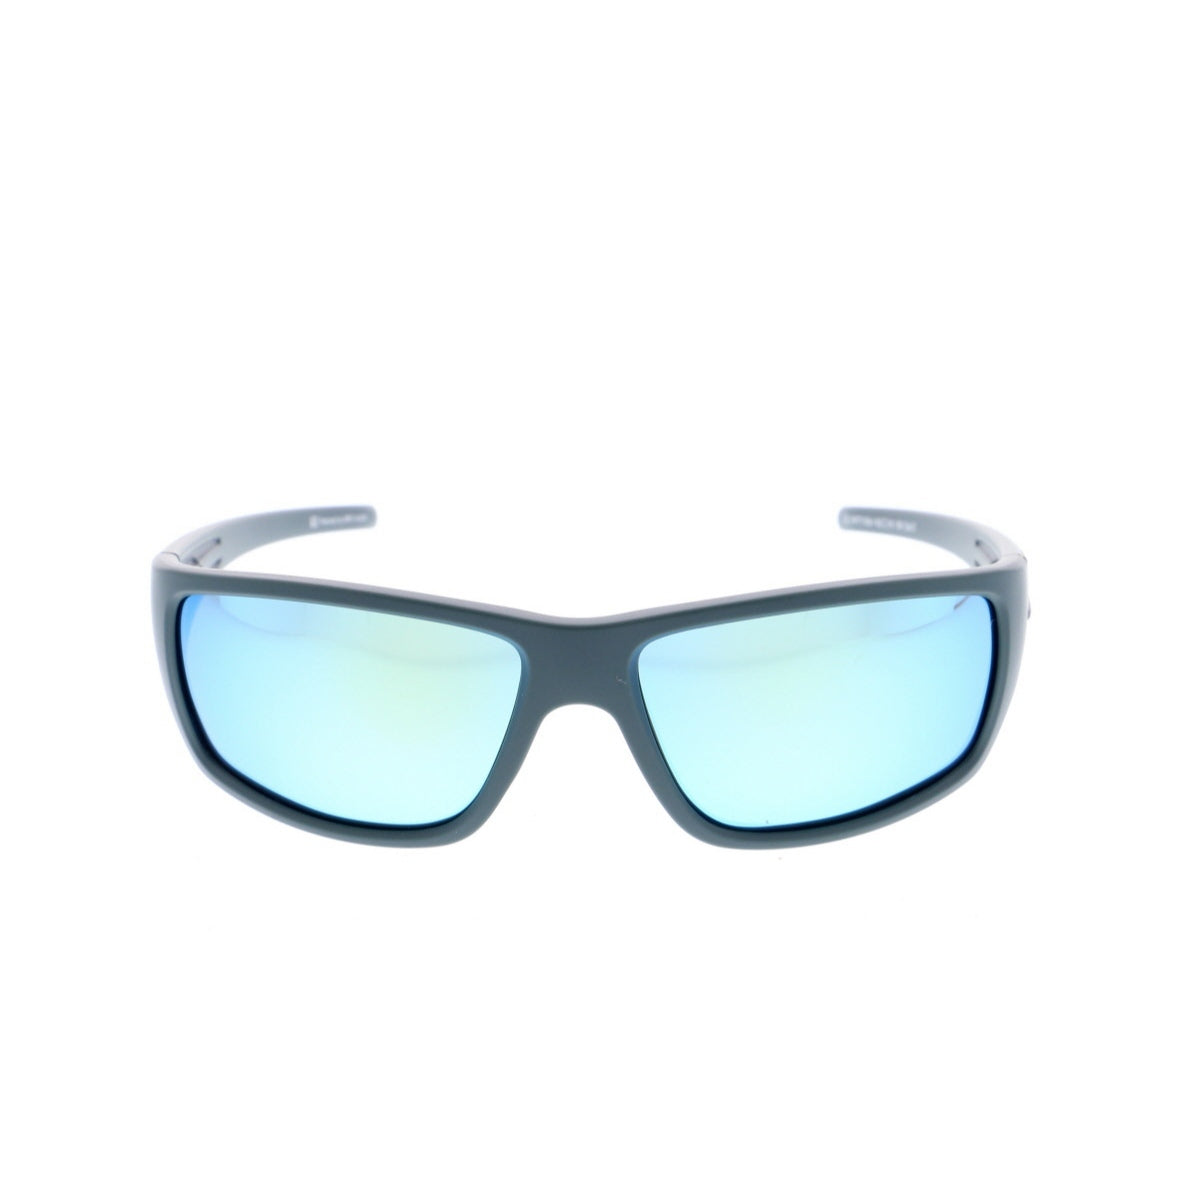 Wraparound Sports Polarized Sunglasses